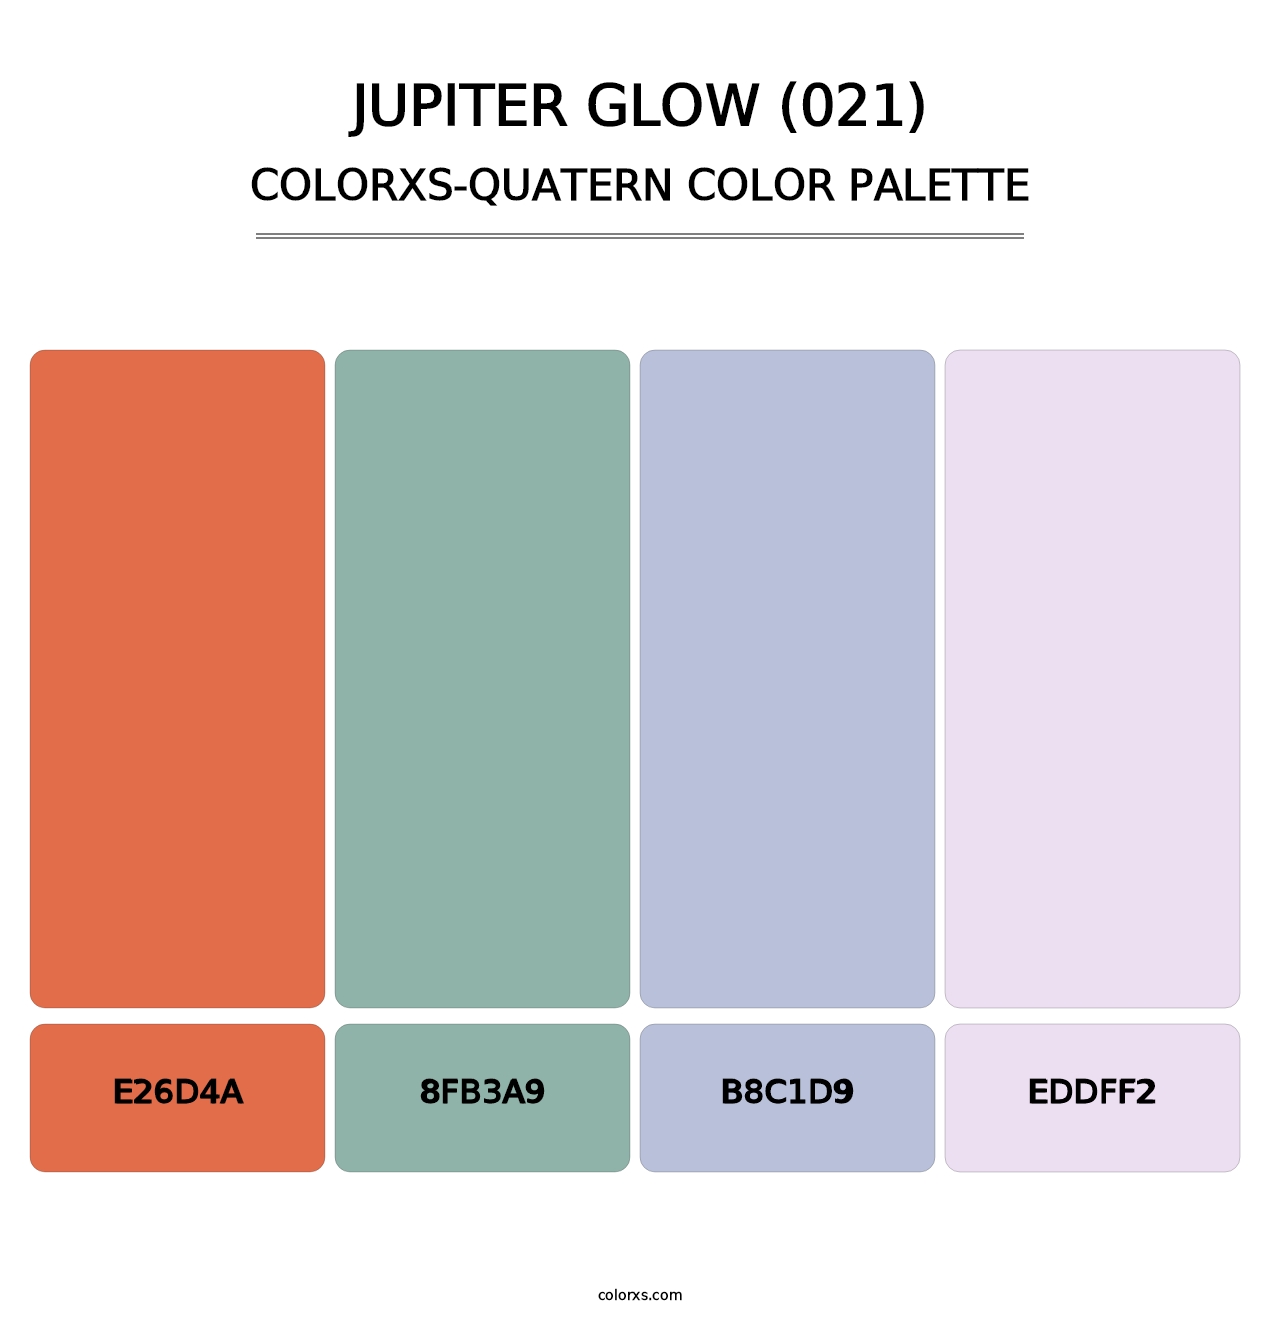 Jupiter Glow (021) - Colorxs Quatern Palette